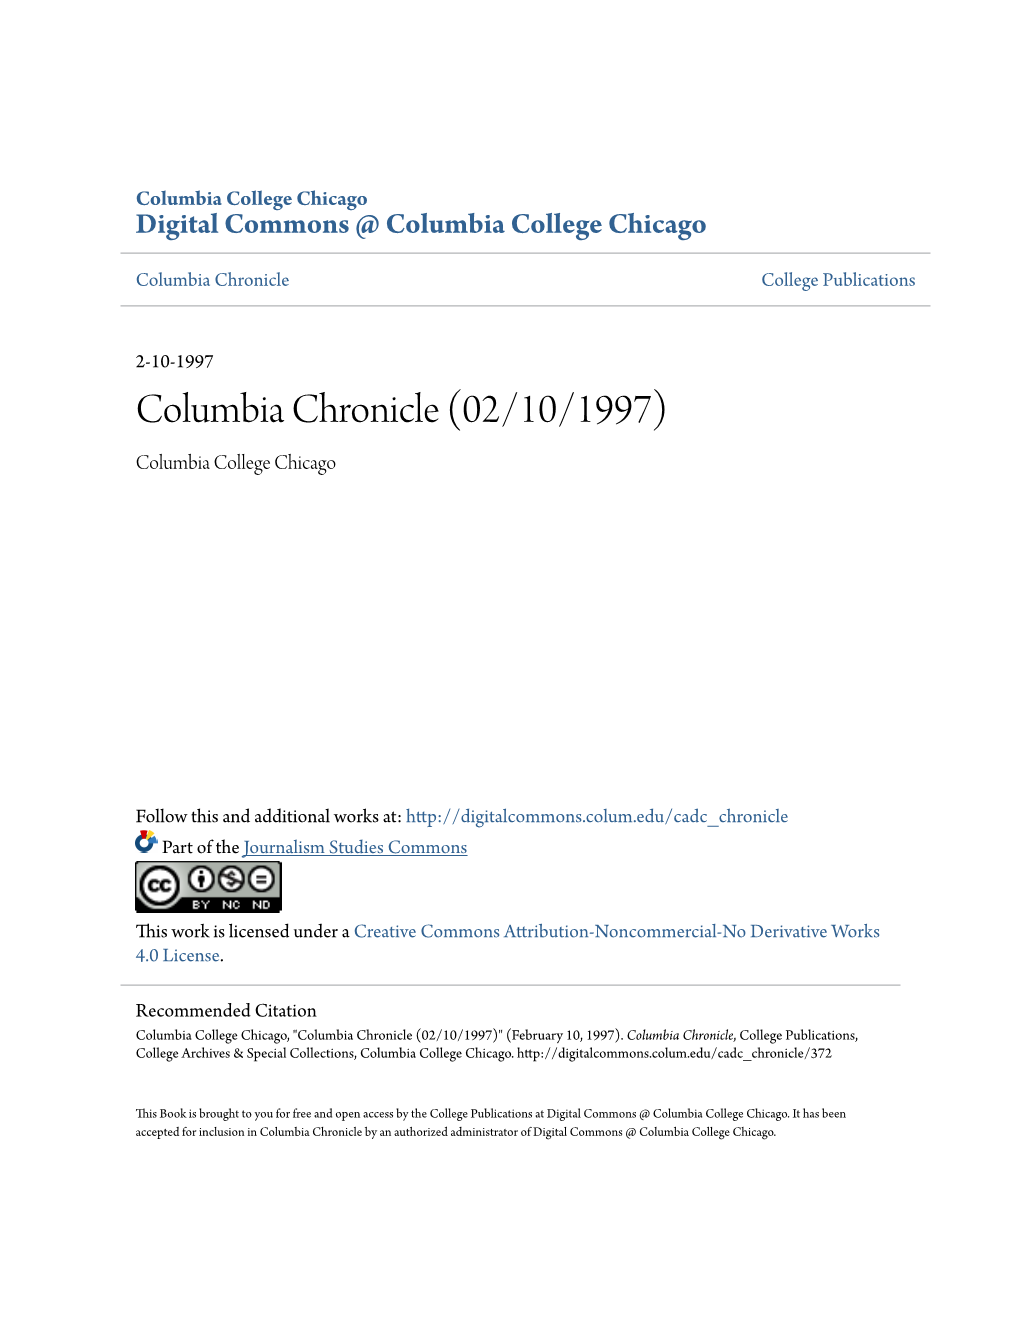 Columbia Chronicle (02/10/1997) Columbia College Chicago